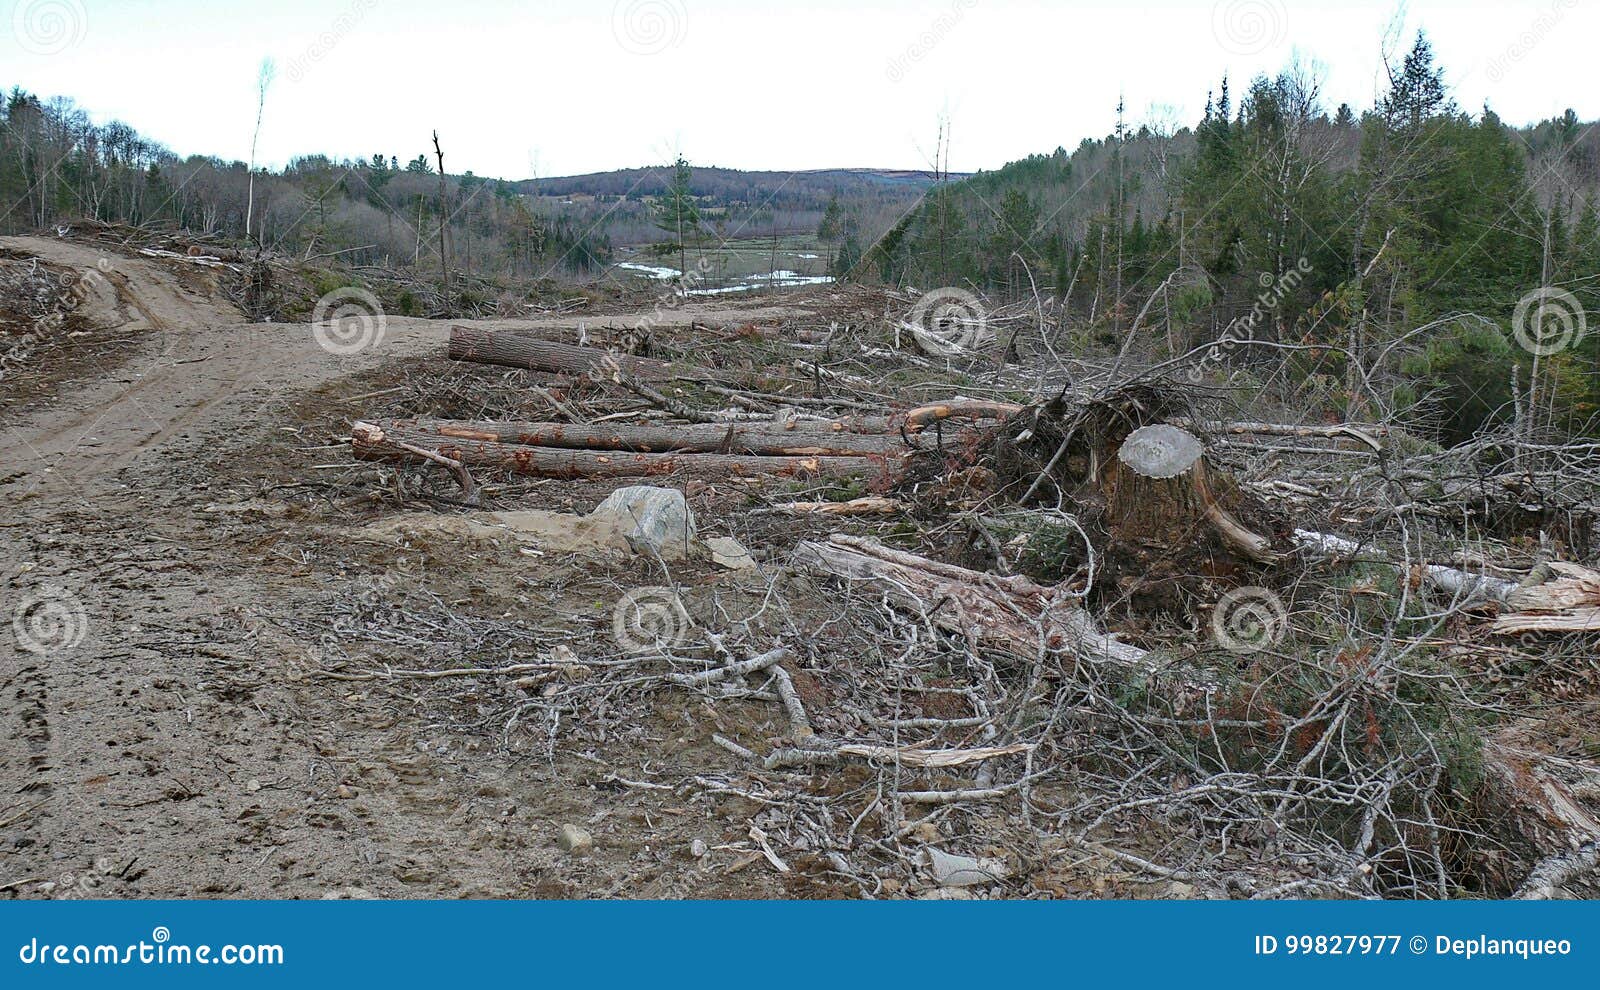 bush destruction in quebec. canada, north america.